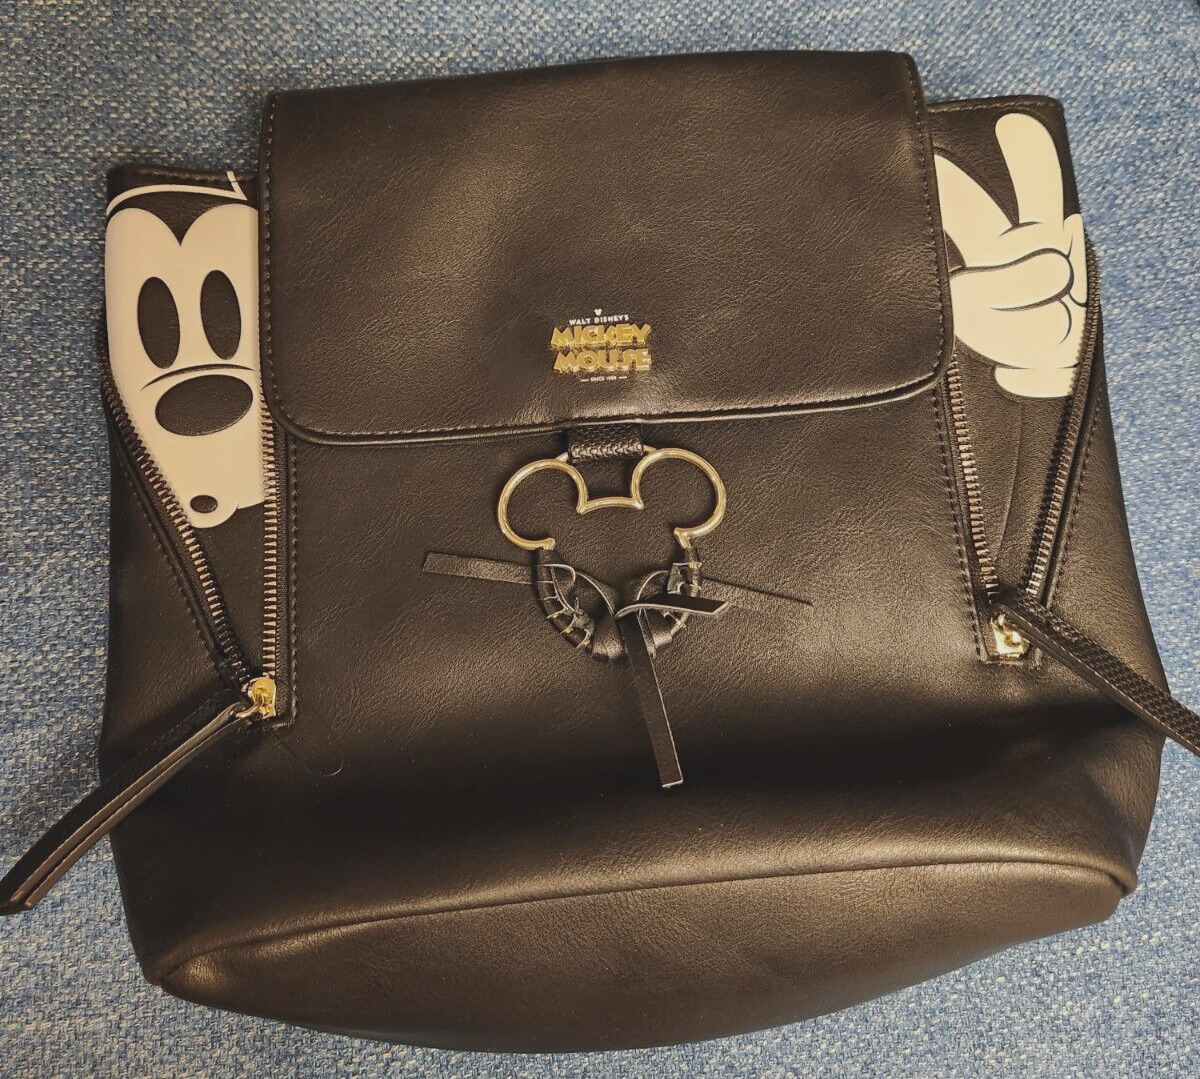 Bioworld Disney Hidden Mickey Mouse Mini Backpack Purse Bag Black Gold Zippers